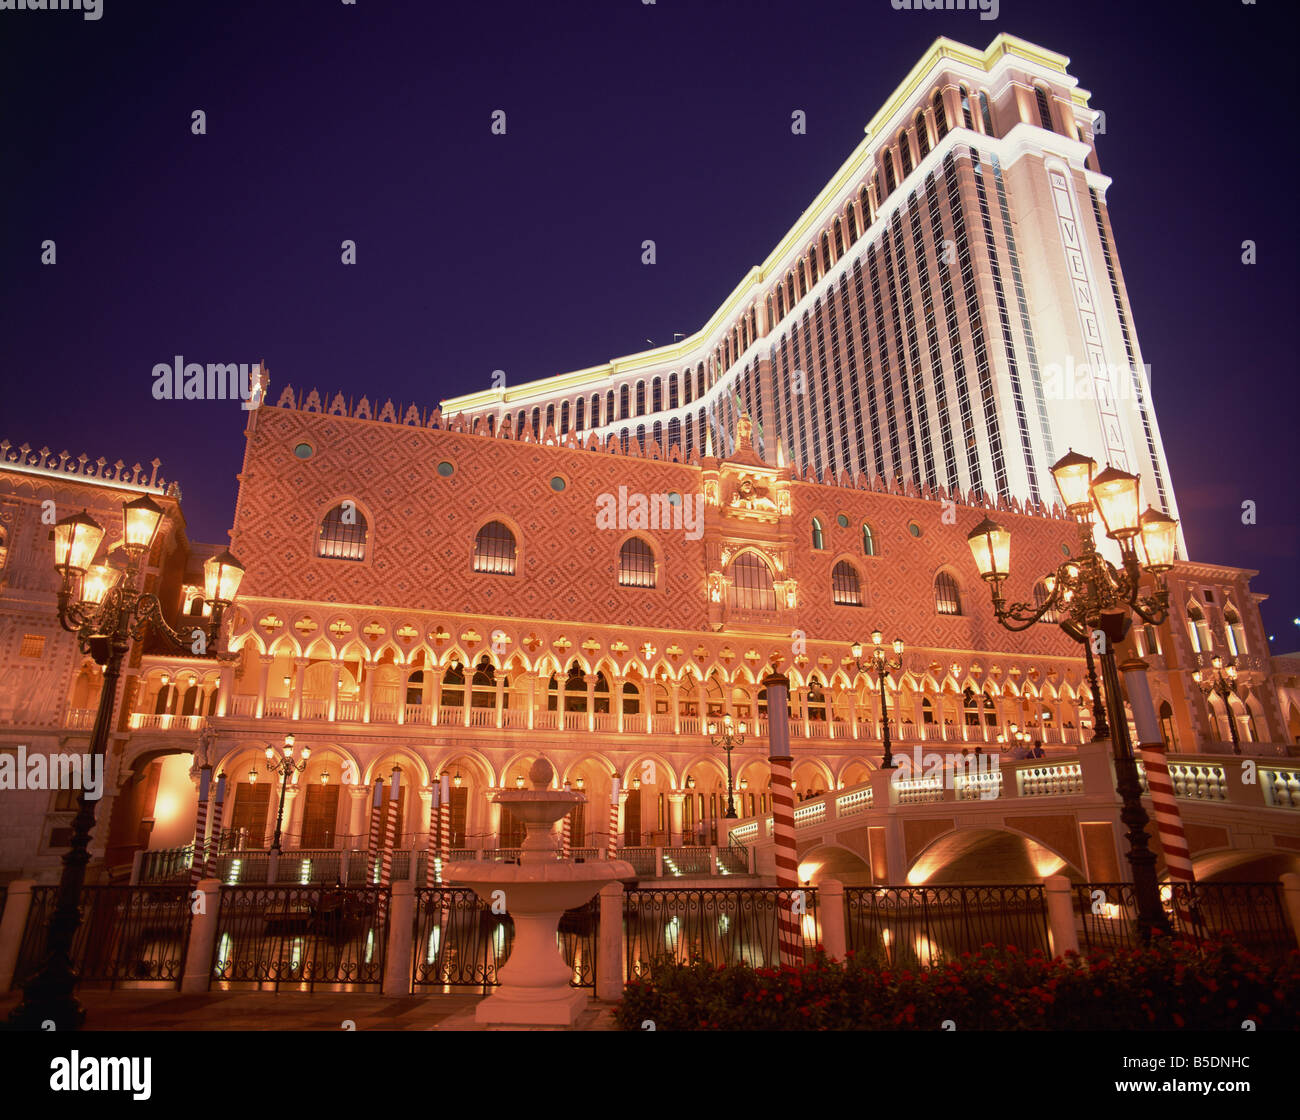 Venetian hotel and casino Las Vegas Nevada United States of America North America Stock Photo